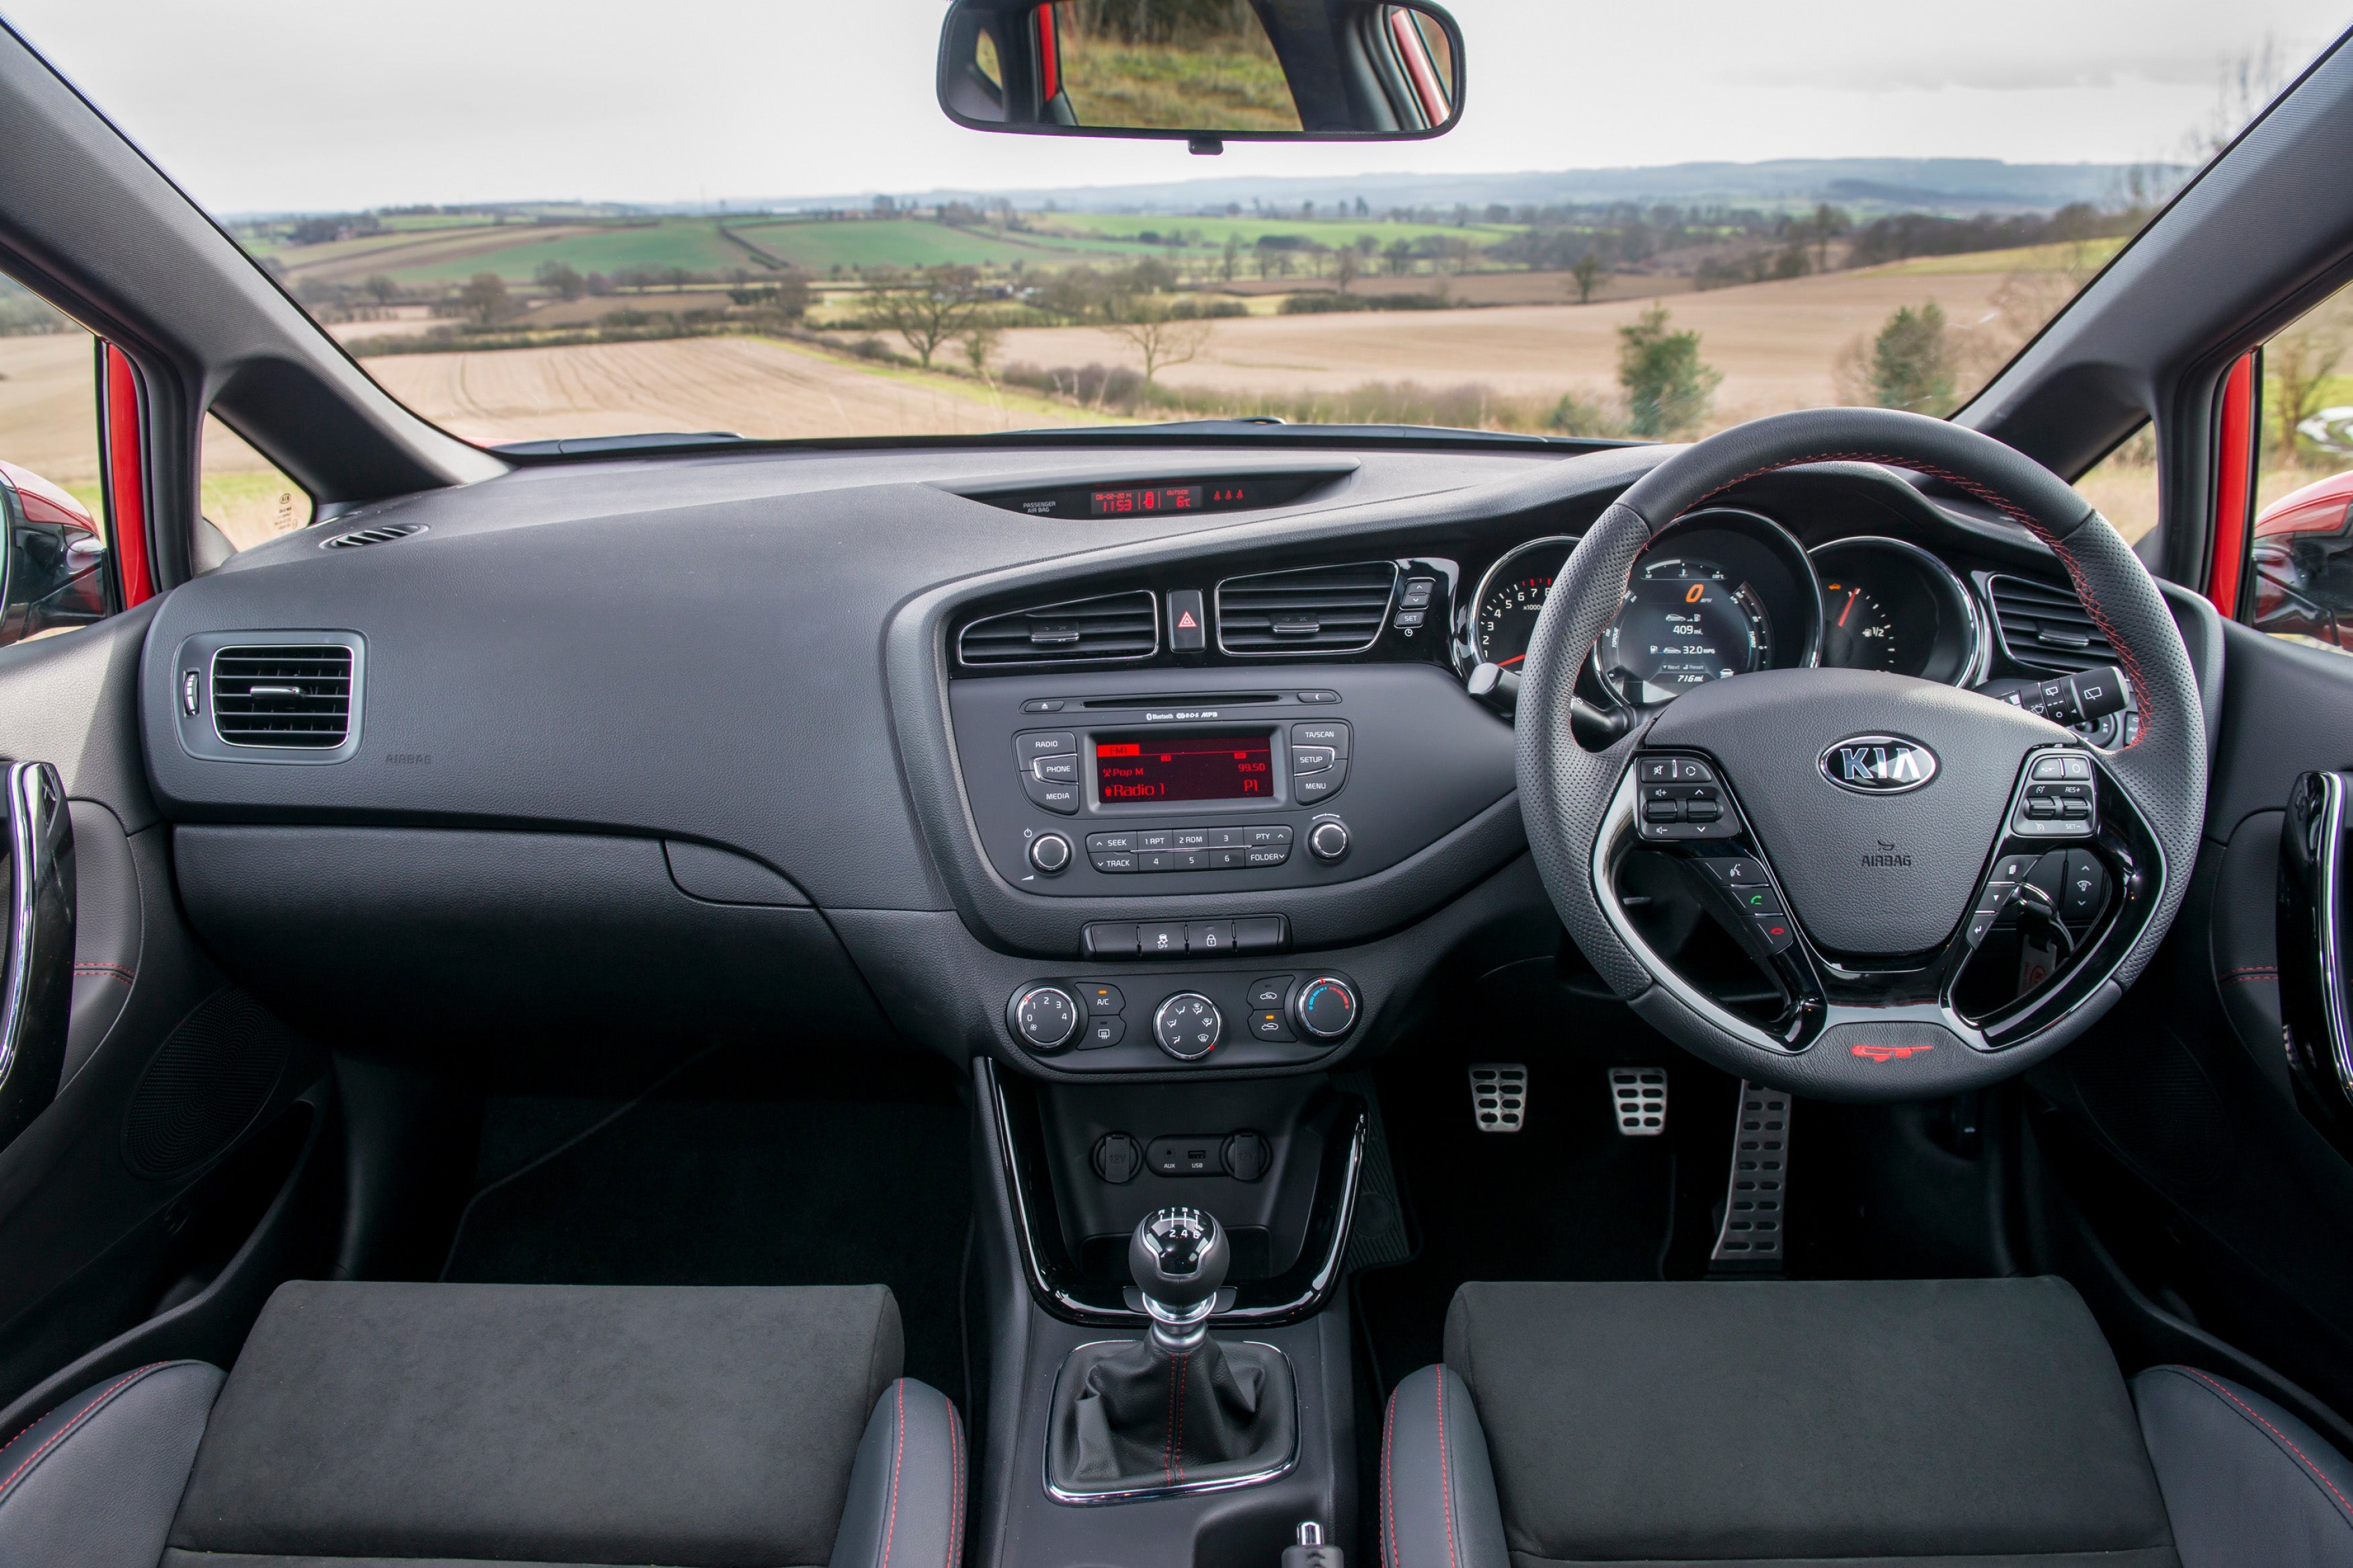 Kia Ceed (2012-2018) Review: interior close up photo of the Kia Ceed dashboard